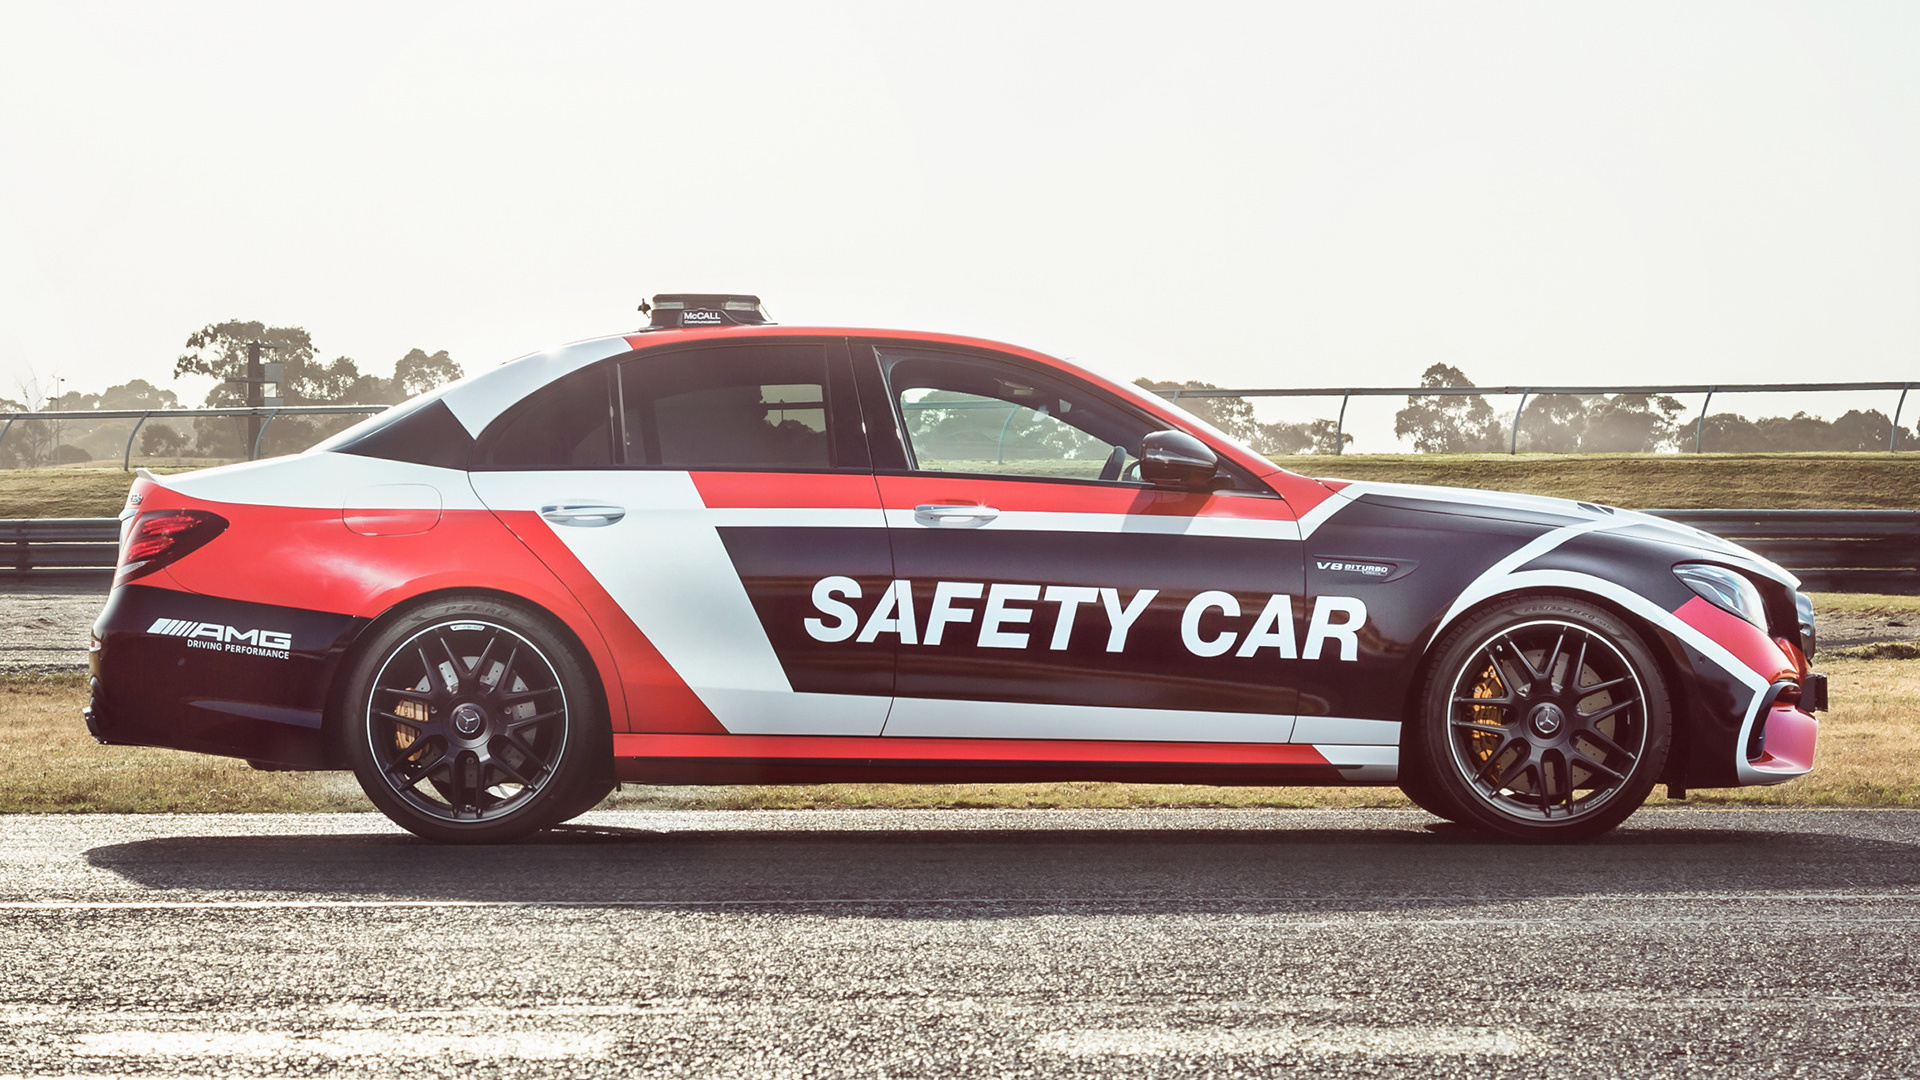 Завантажити шпалери Mercedes Amg E 63 S Safety Car на телефон безкоштовно